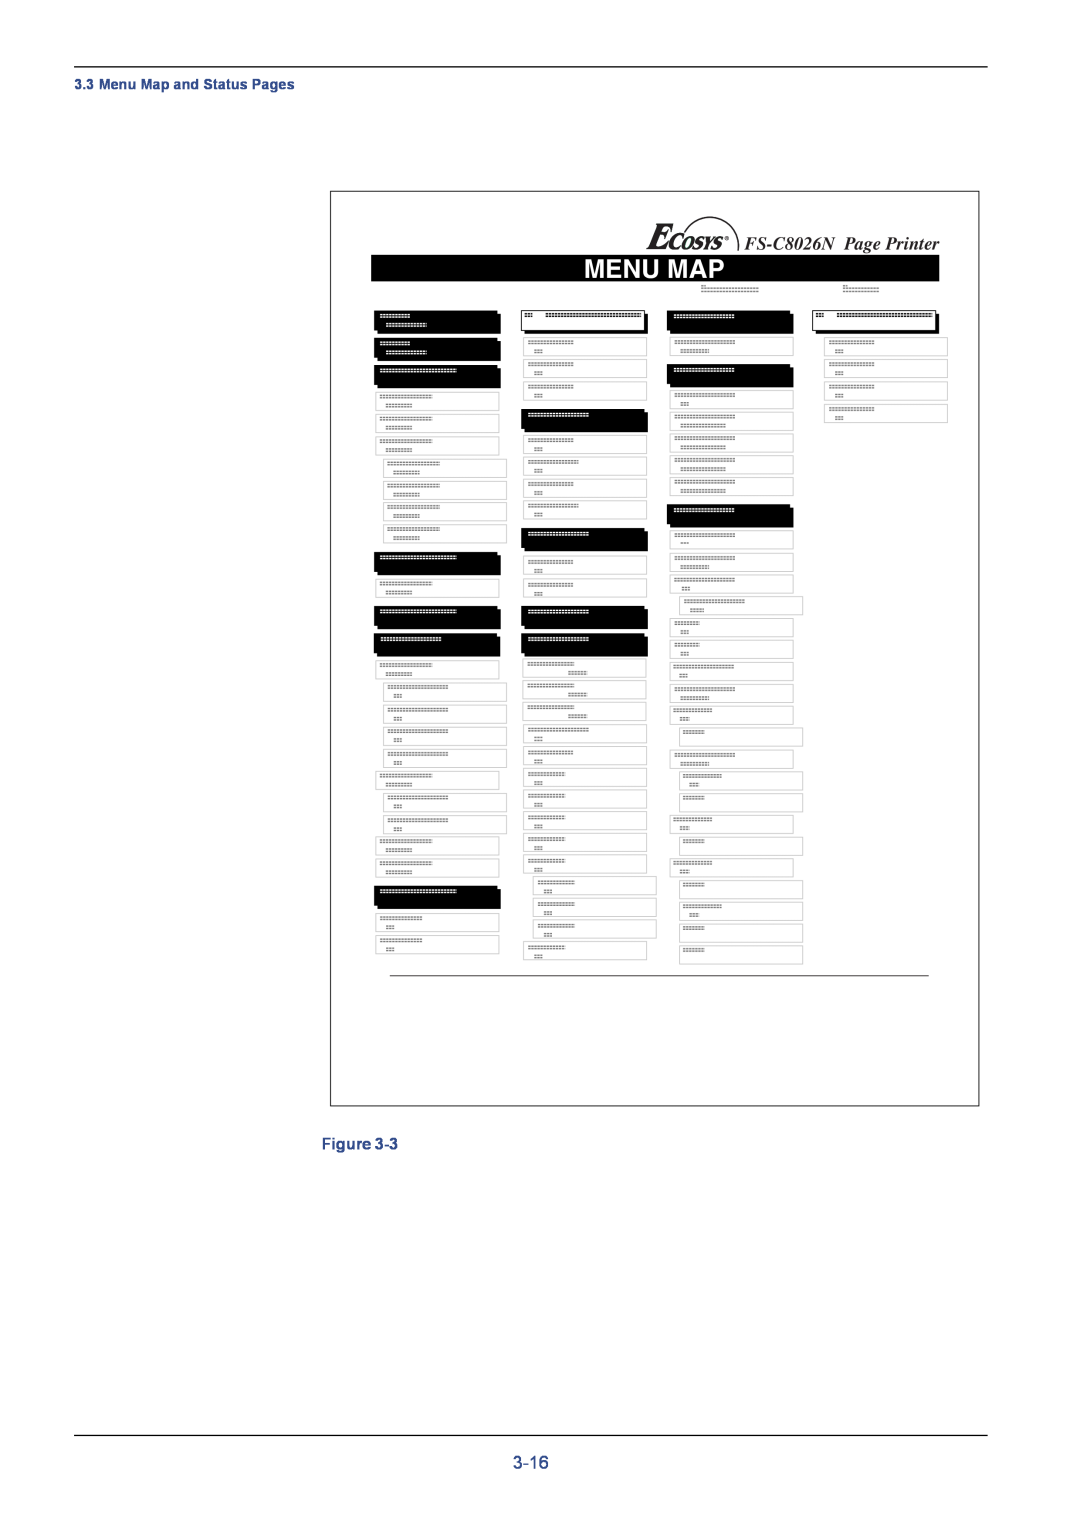 Kyocera manual FS-C8026N Page Printer, 3-16, Menu Map and Status Pages 